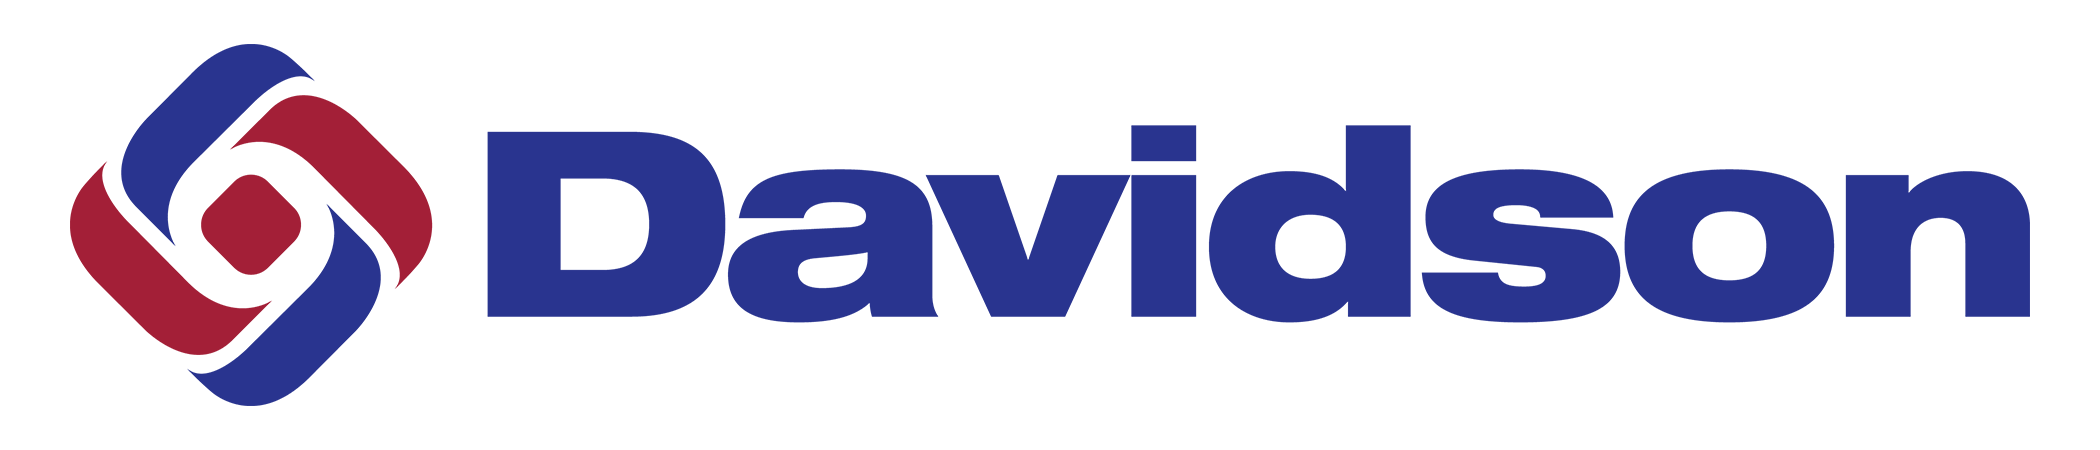 Davidson Technologies, Inc. logo